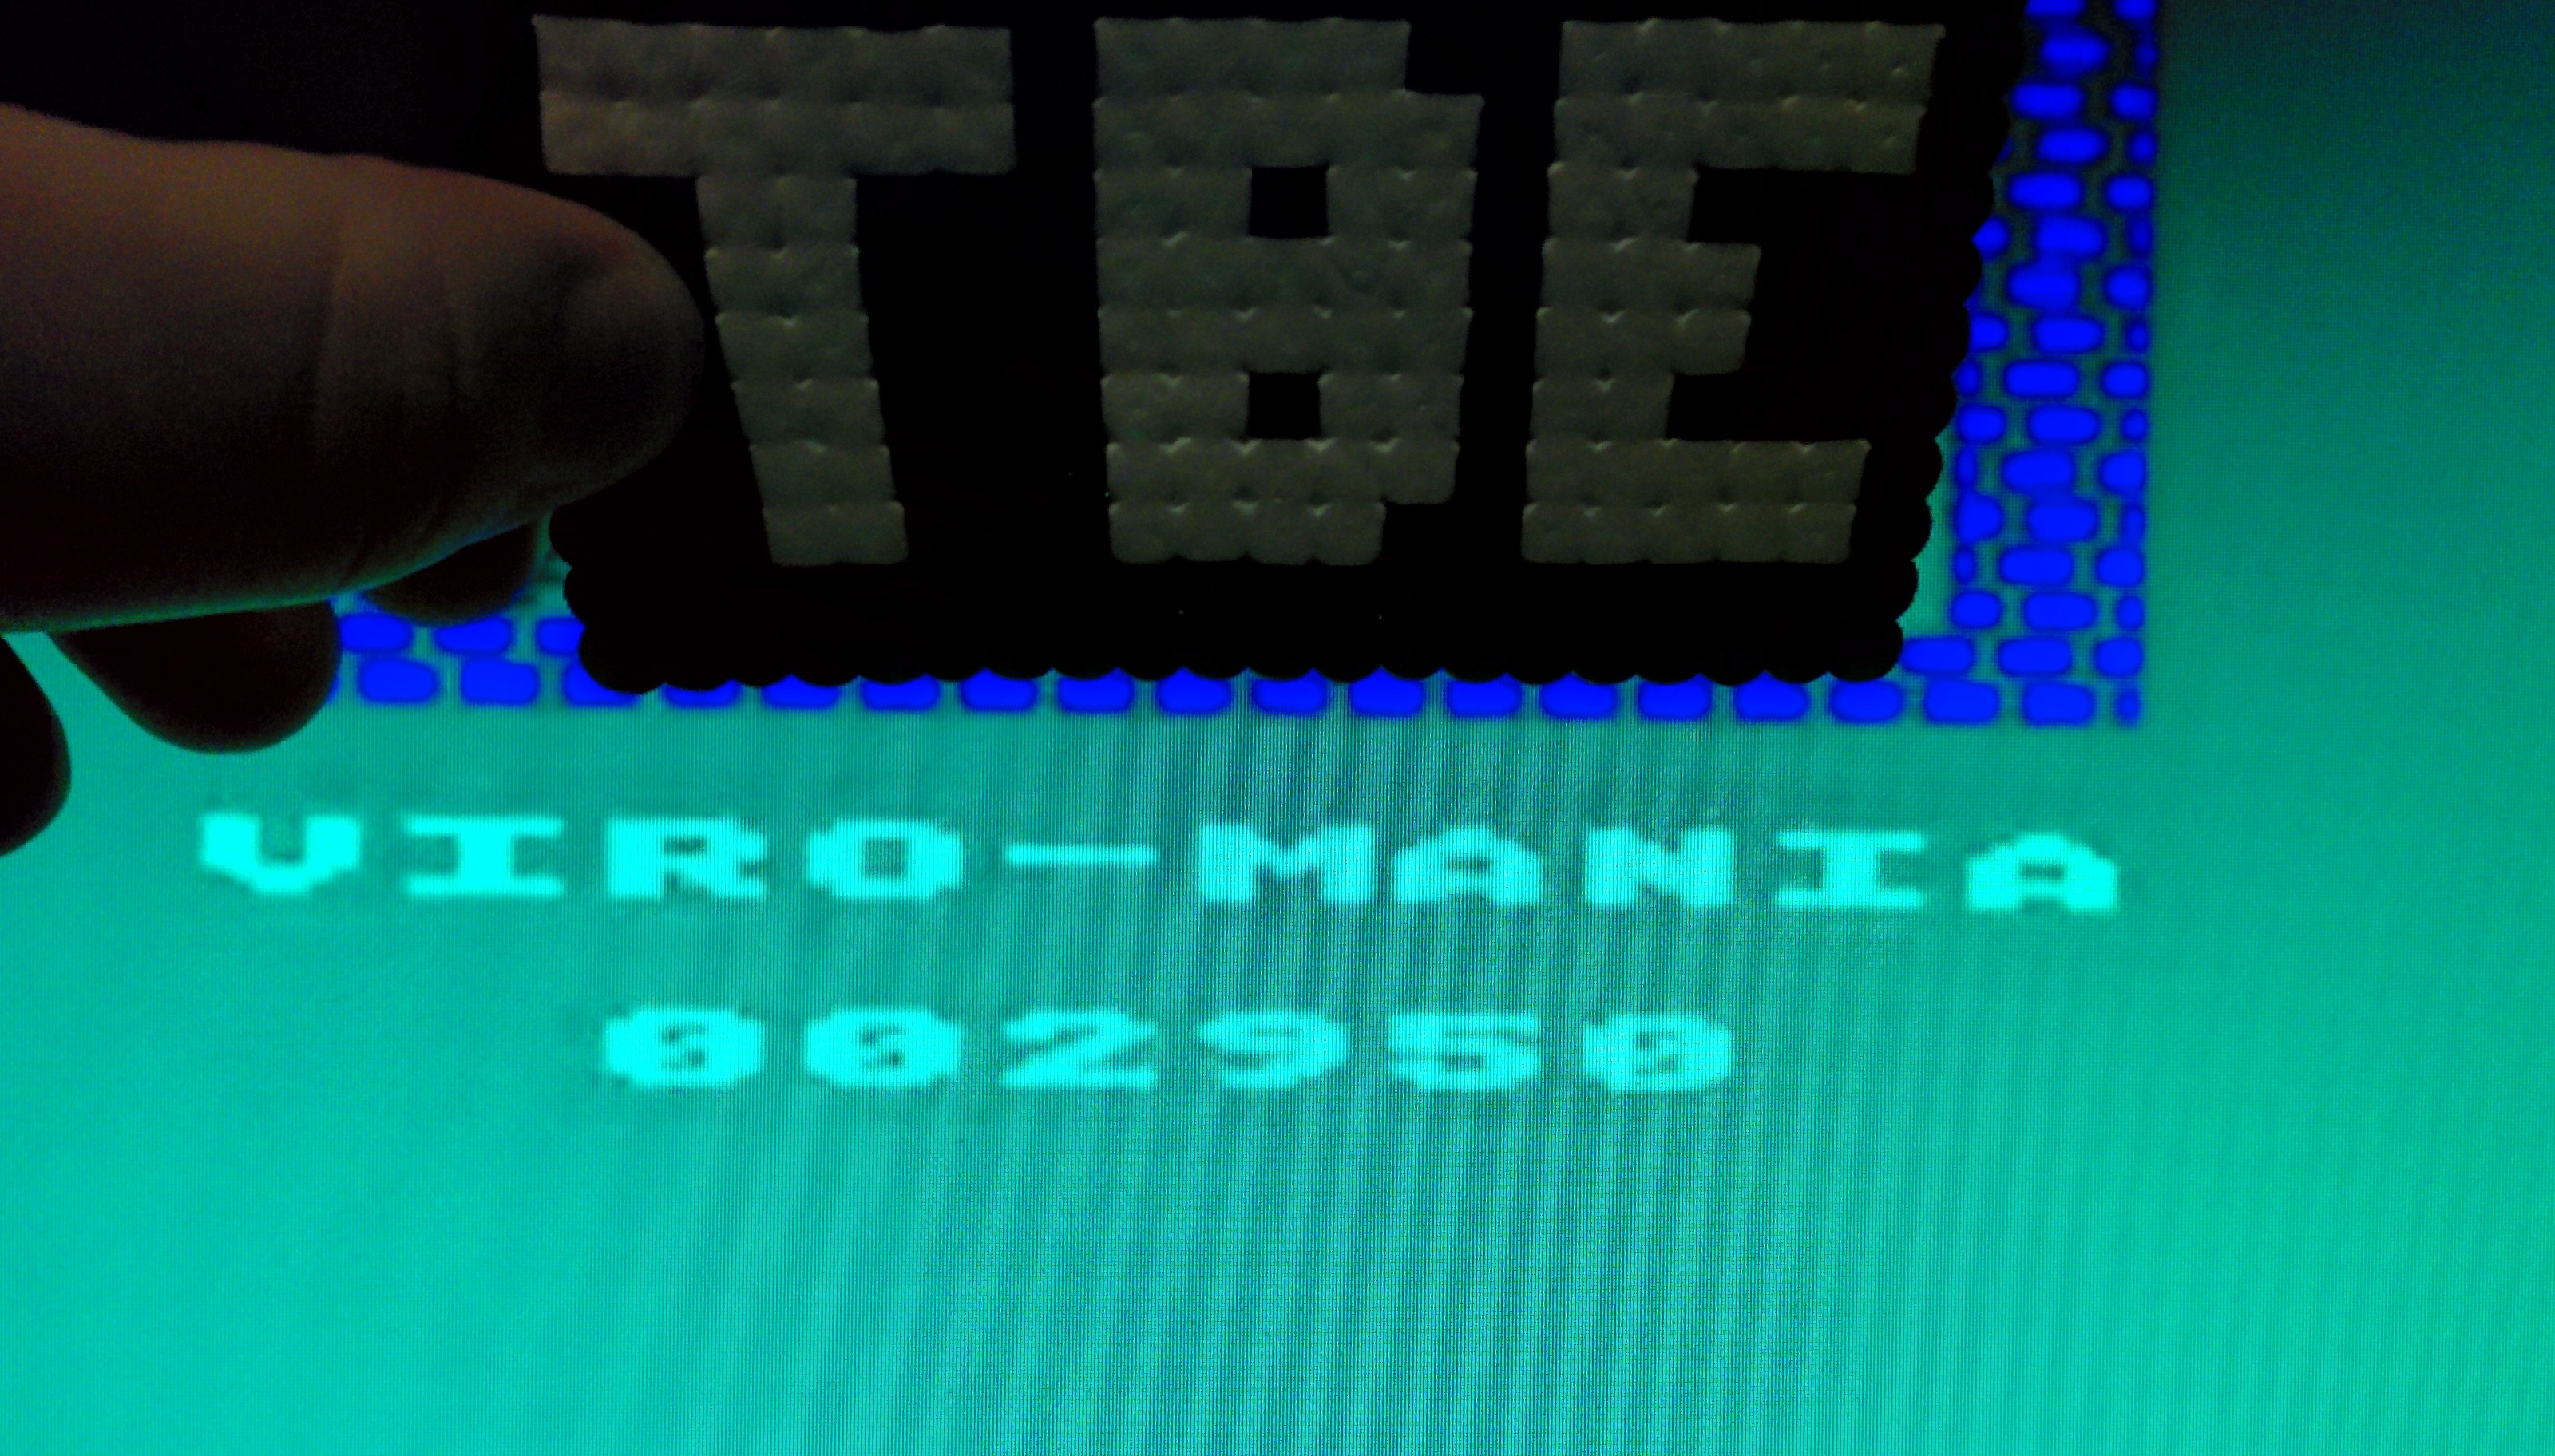 Sixx: Viro-Mania (Atari 400/800/XL/XE Emulated) 2,950 points on 2014-10-27 11:03:52